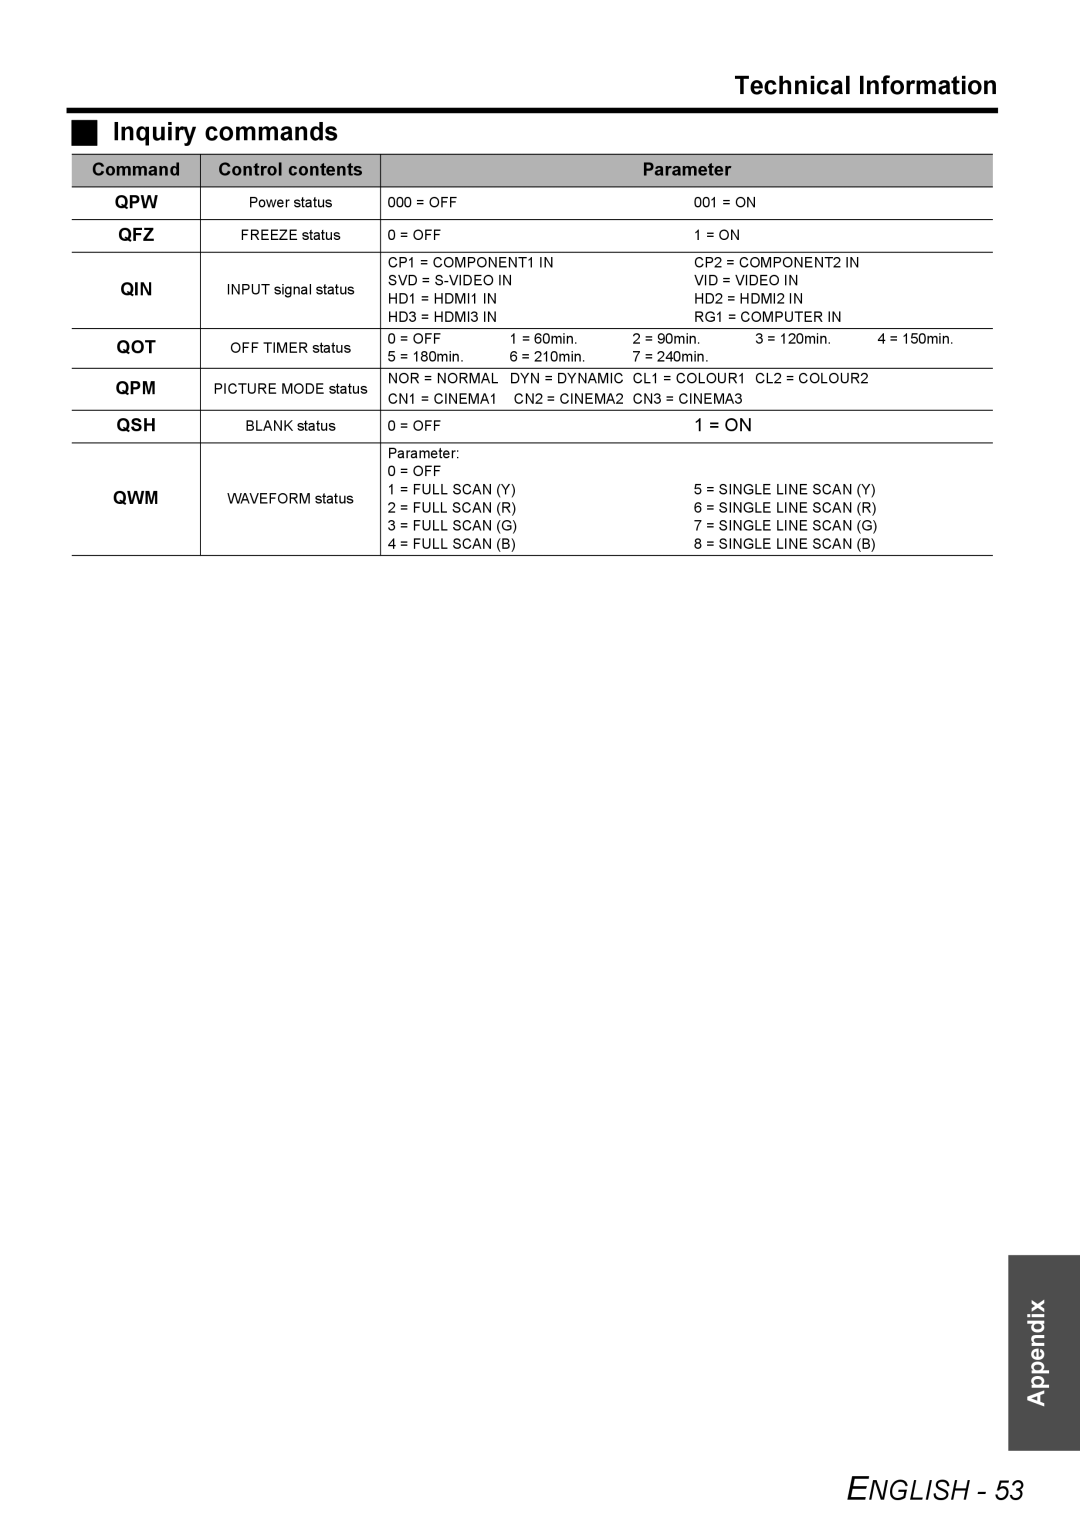 Panasonic PT-AE3000E manual Inquiry commands, Technical Information, English, Appendix 